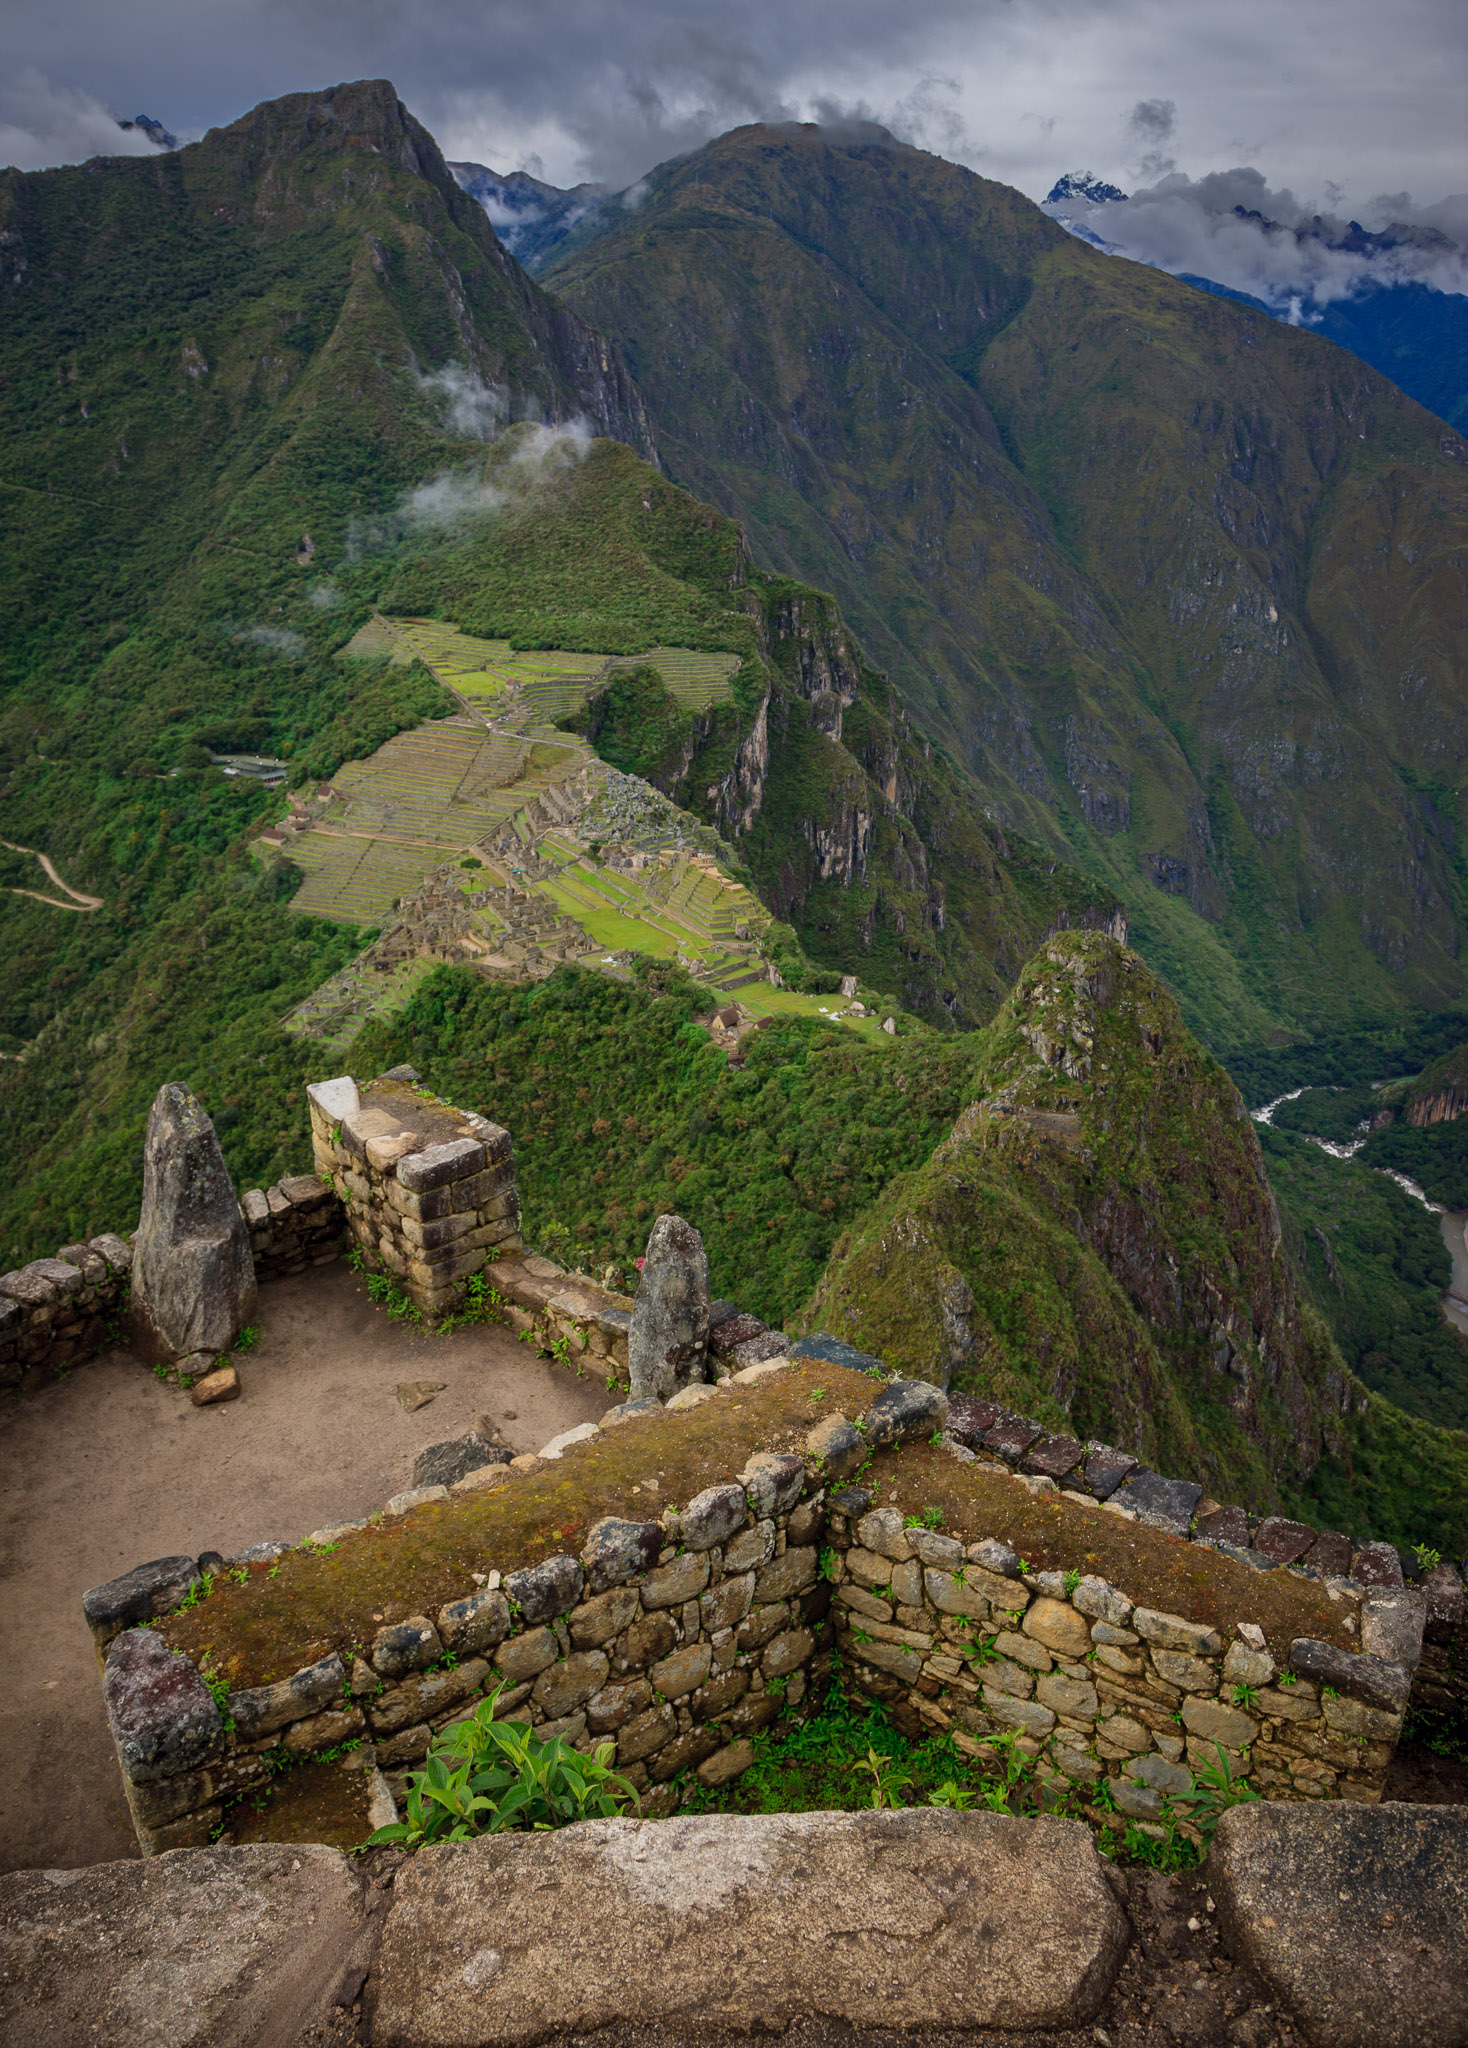 View back to Machu Picchu from Wayna Picchu